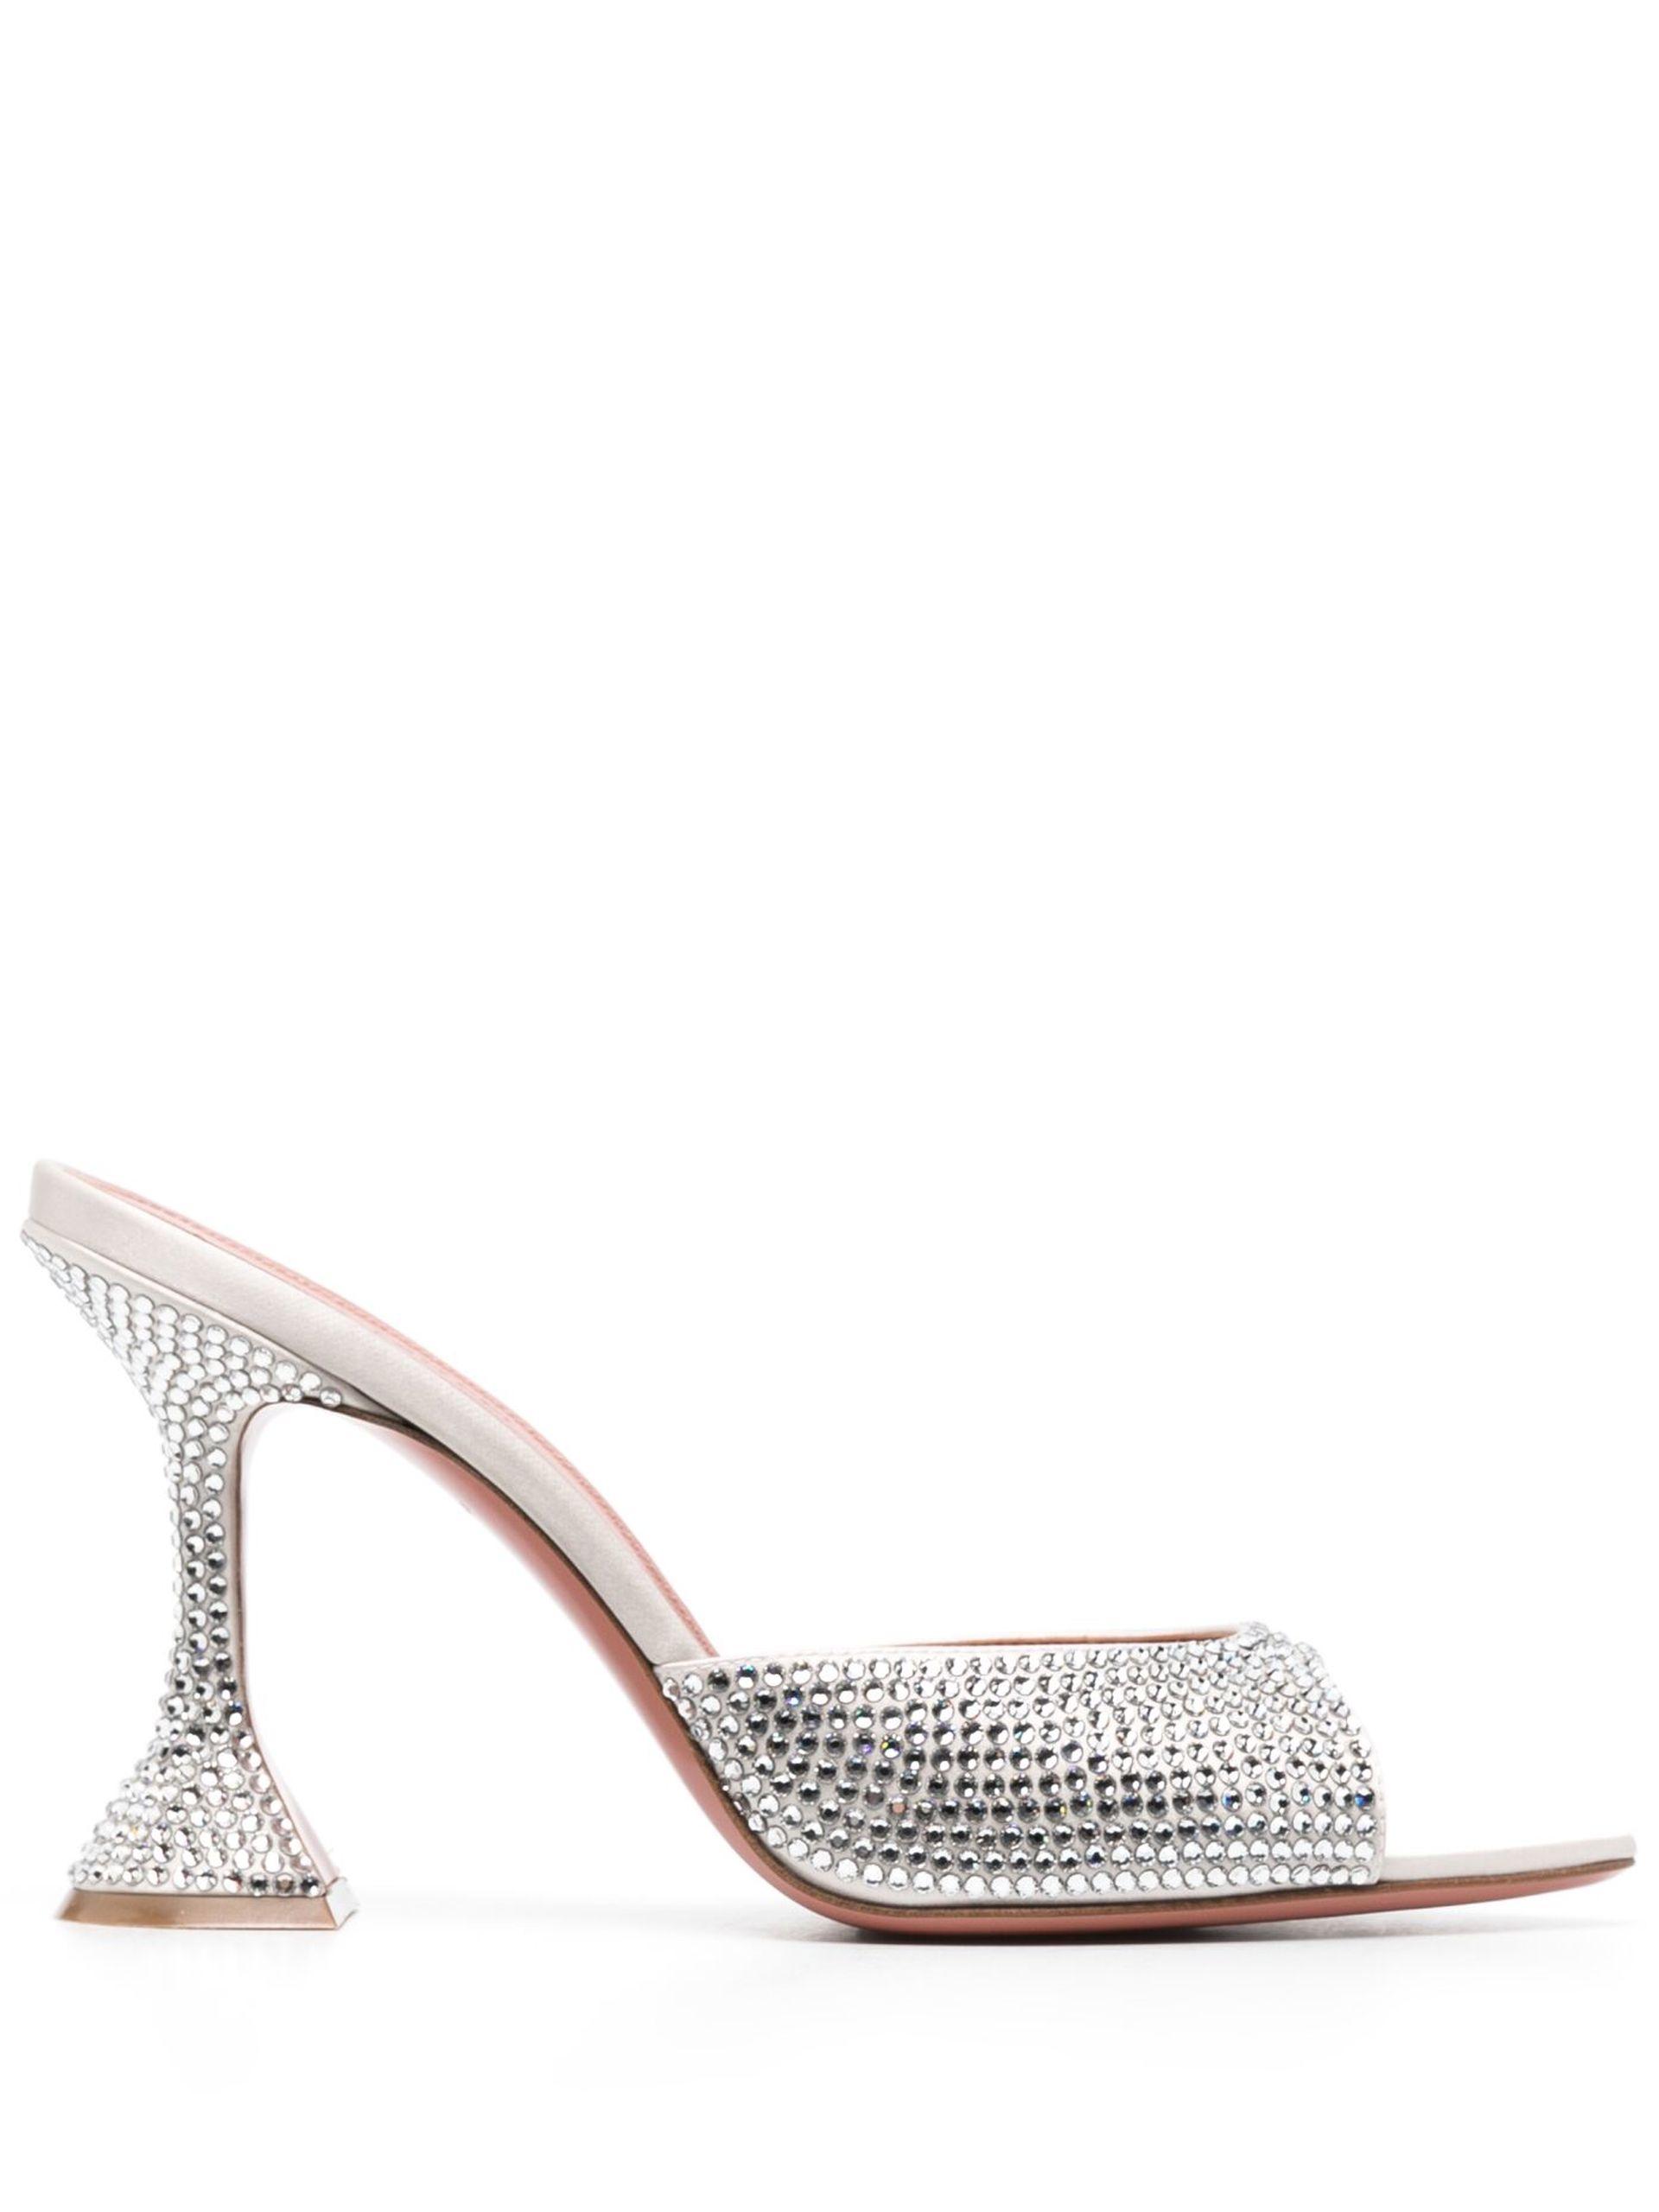 AMINA MUADDI Caroline 105mm Crystal-embellished Sandals in White | Lyst